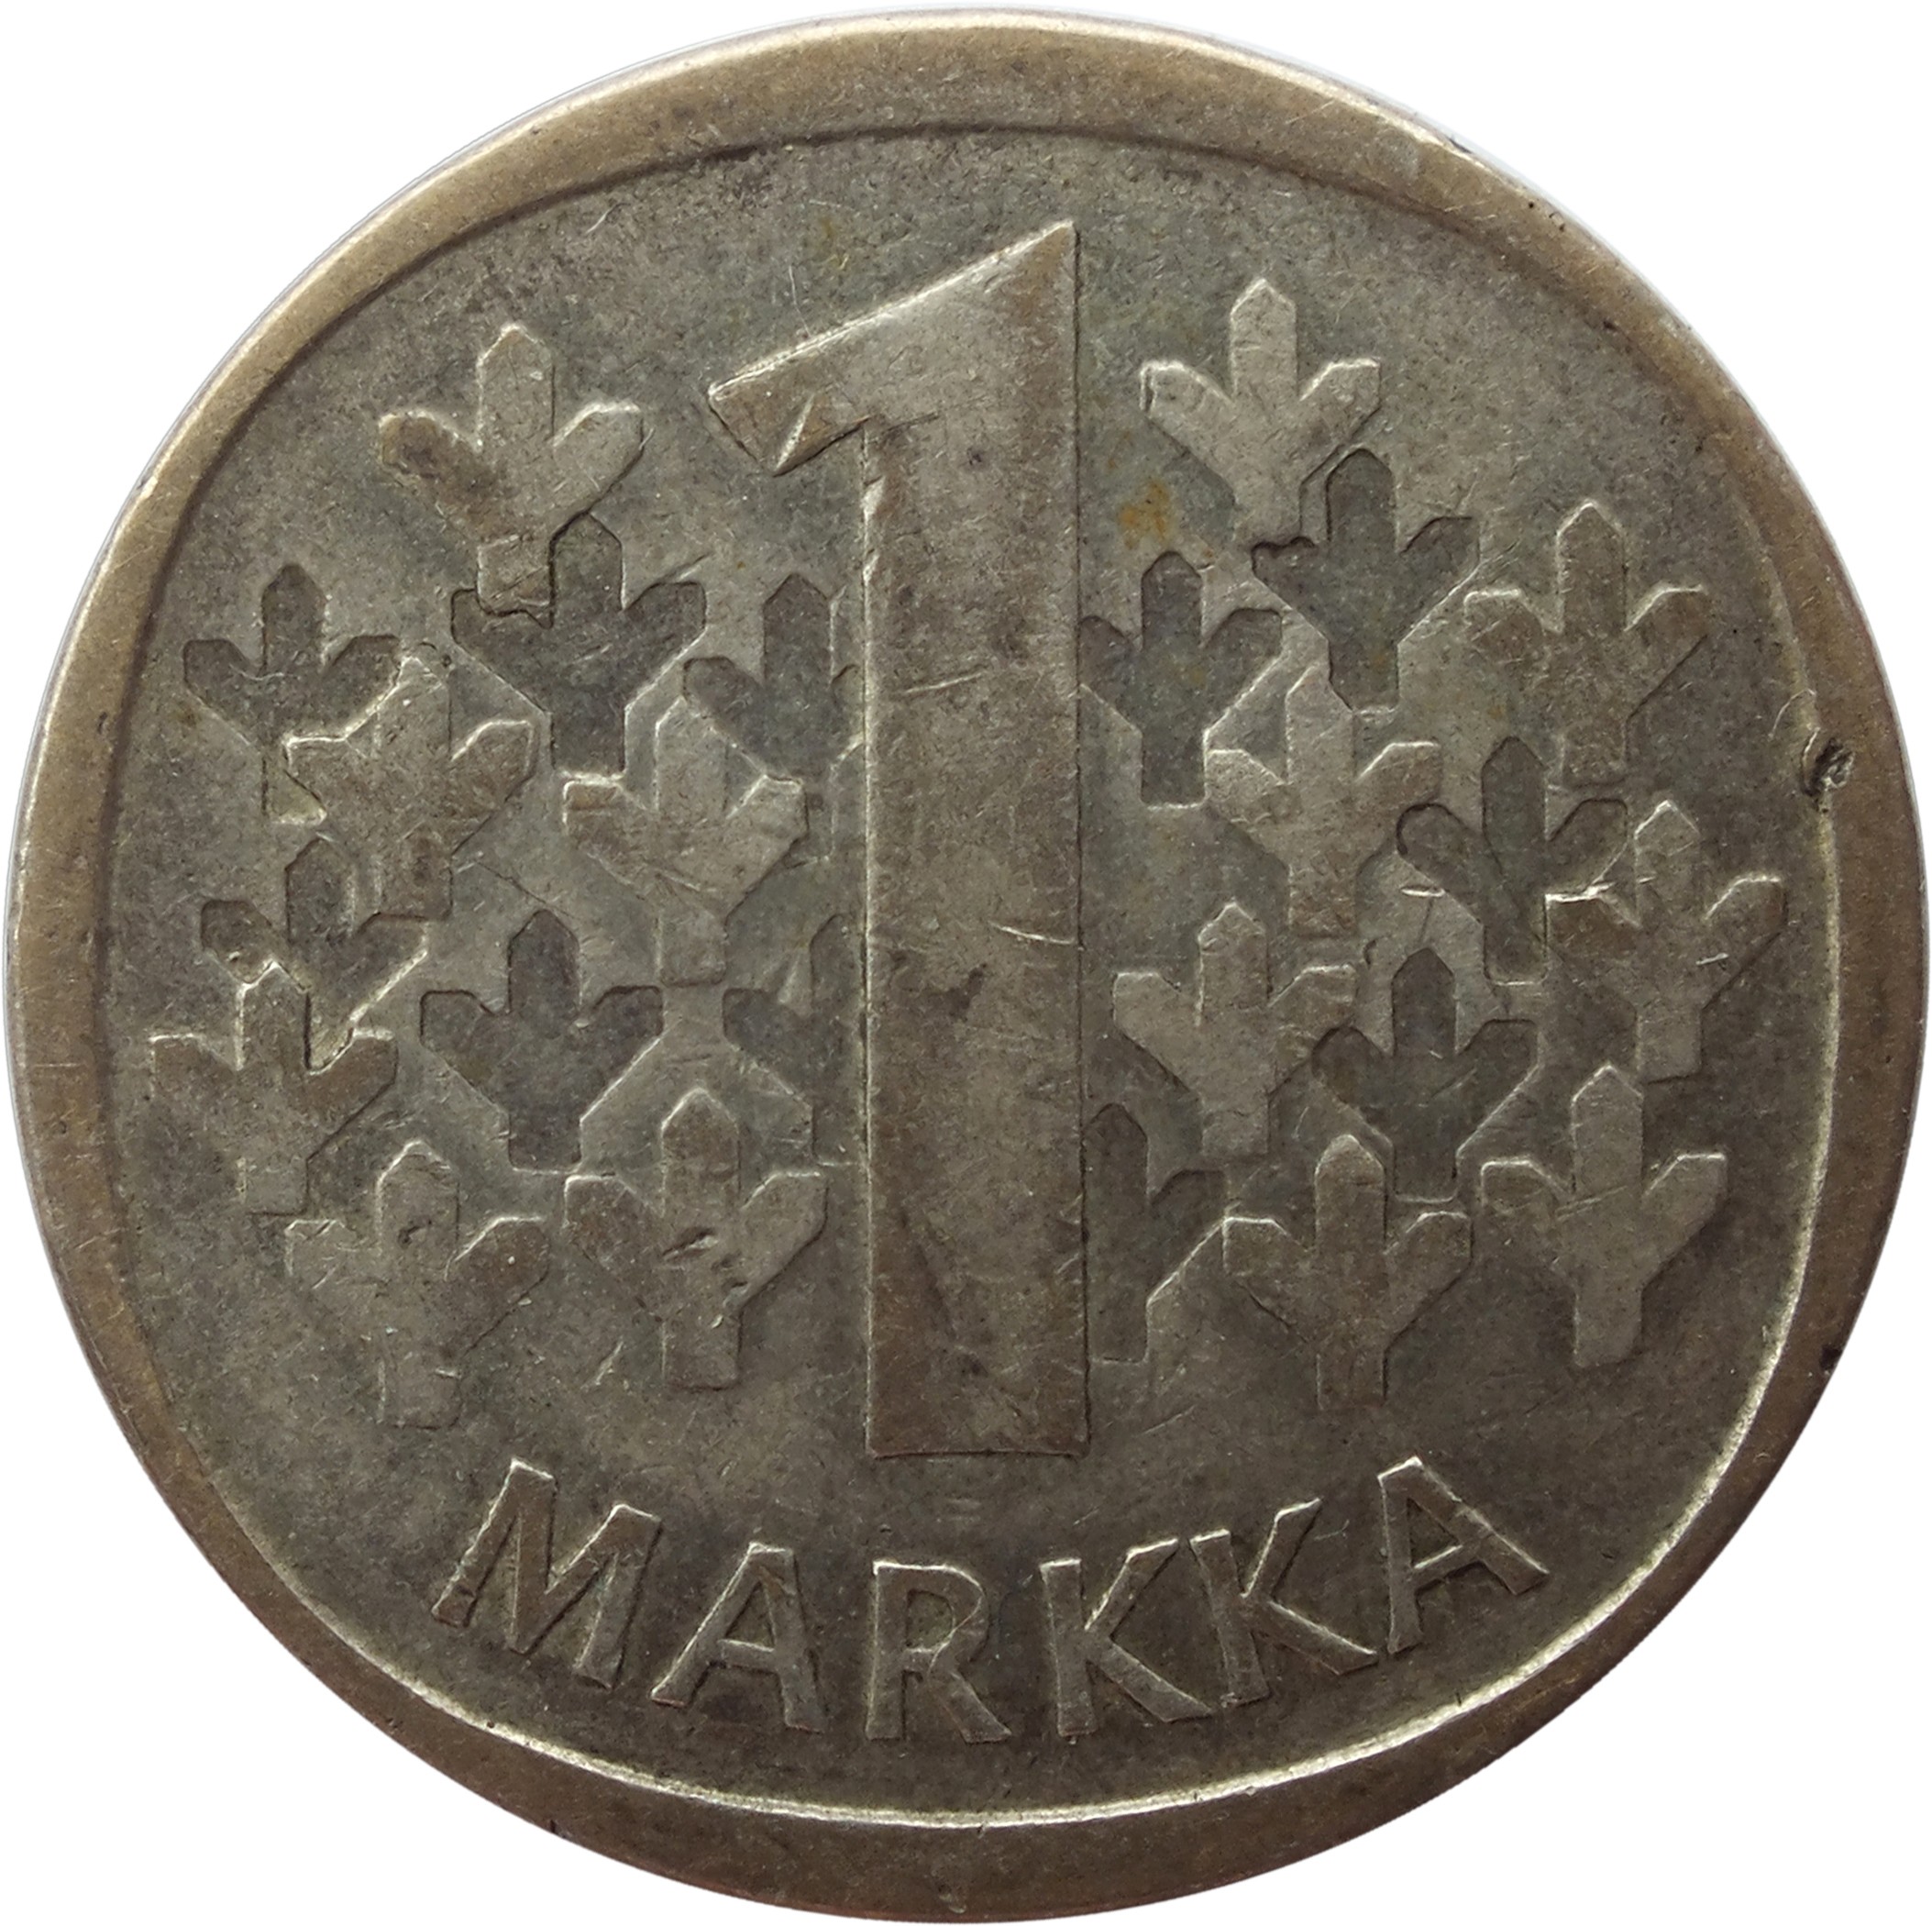 1 mark each. Suomen tasavalta монеты. 1 Markka Finland. Финляндия 1 марка монета. Монеты древней Финляндии.